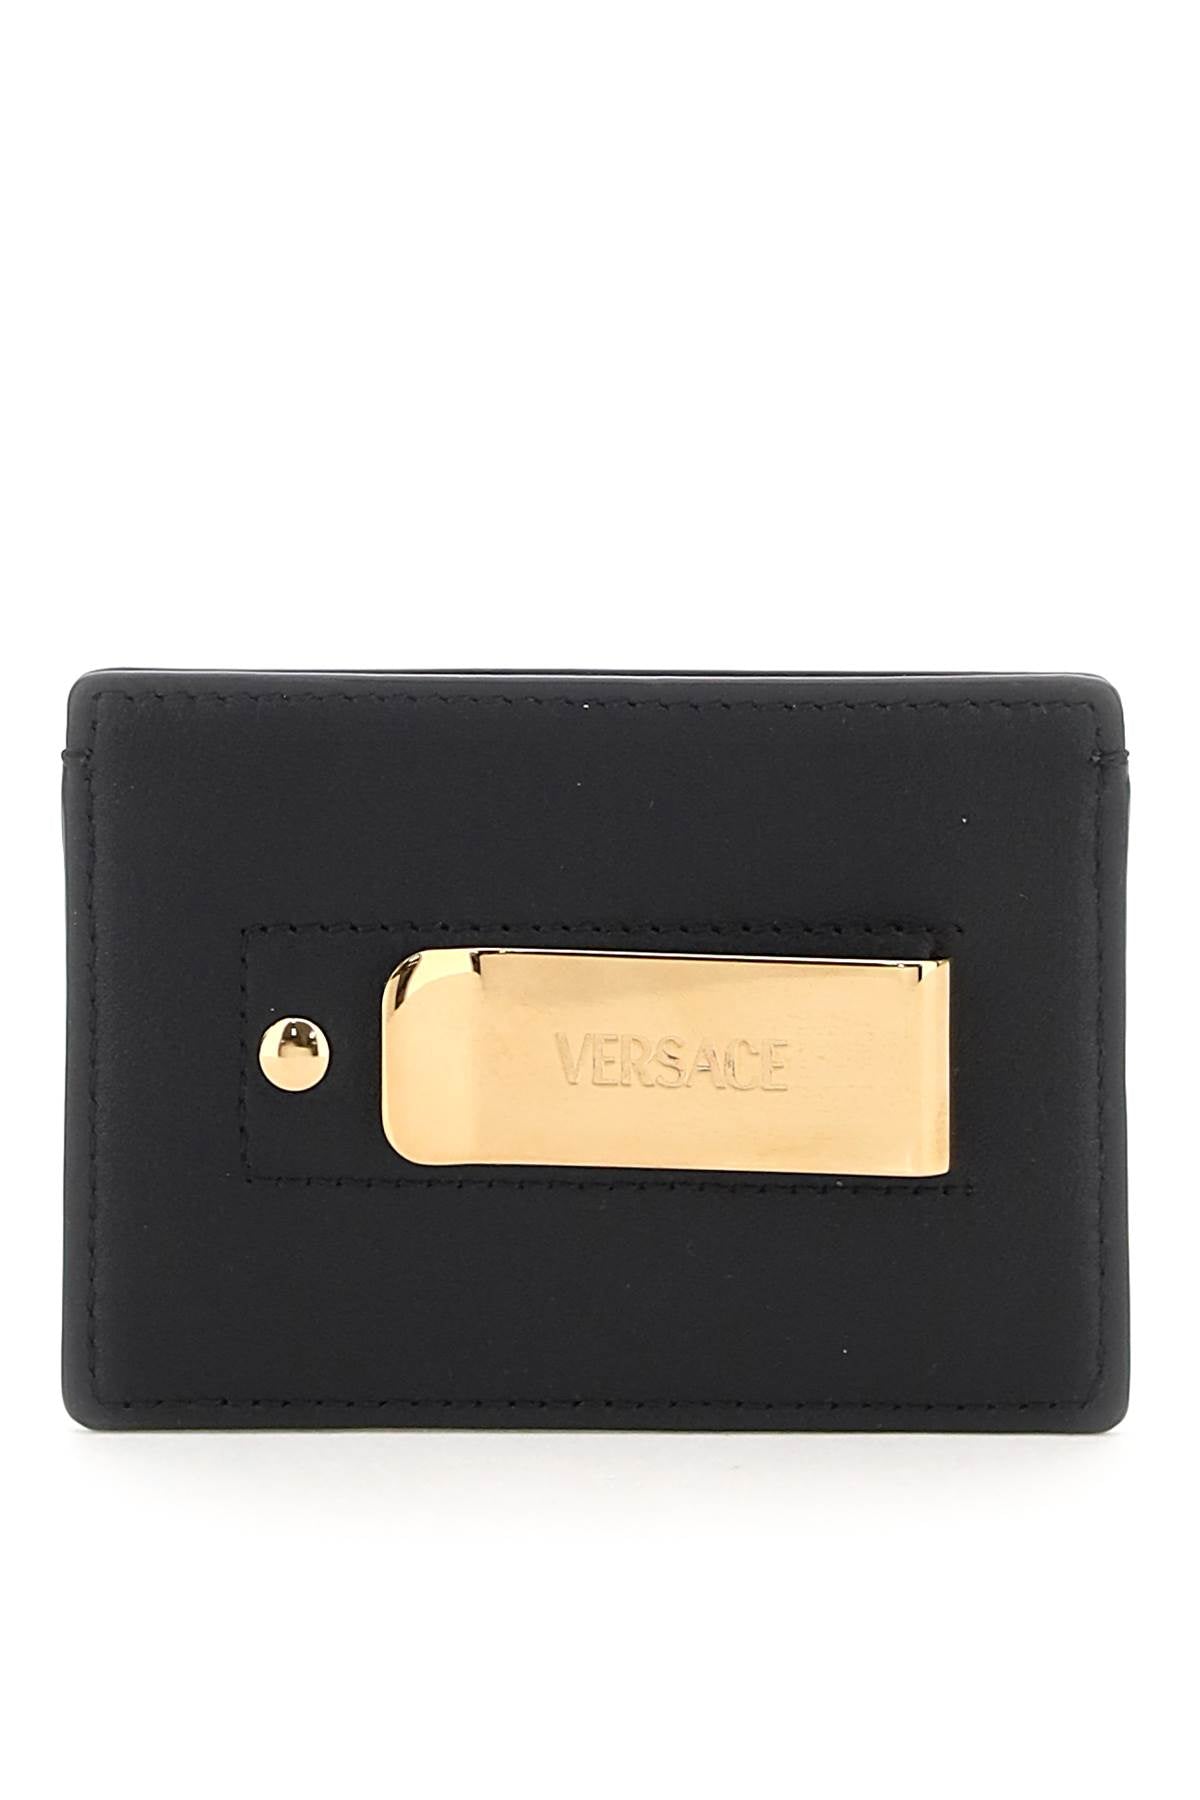 Versace leather medusa cardholder-2